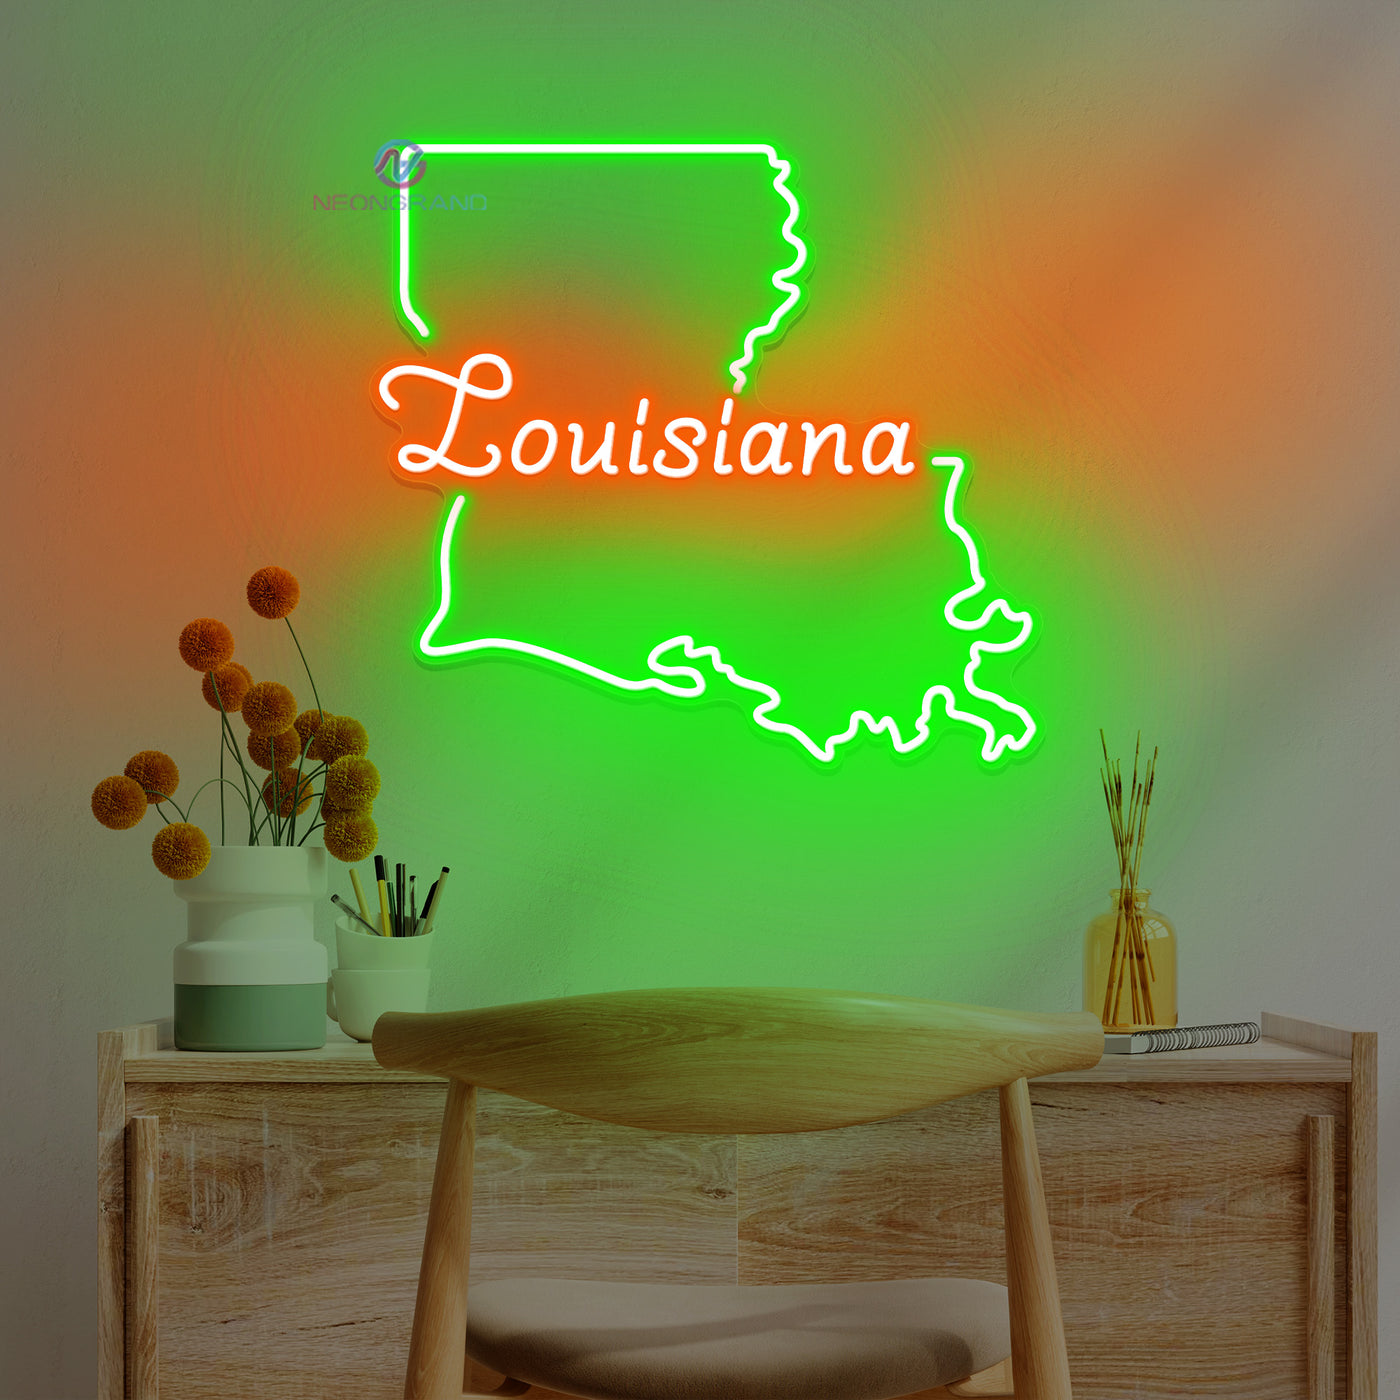 Louisiana Neon Sign Led Light green